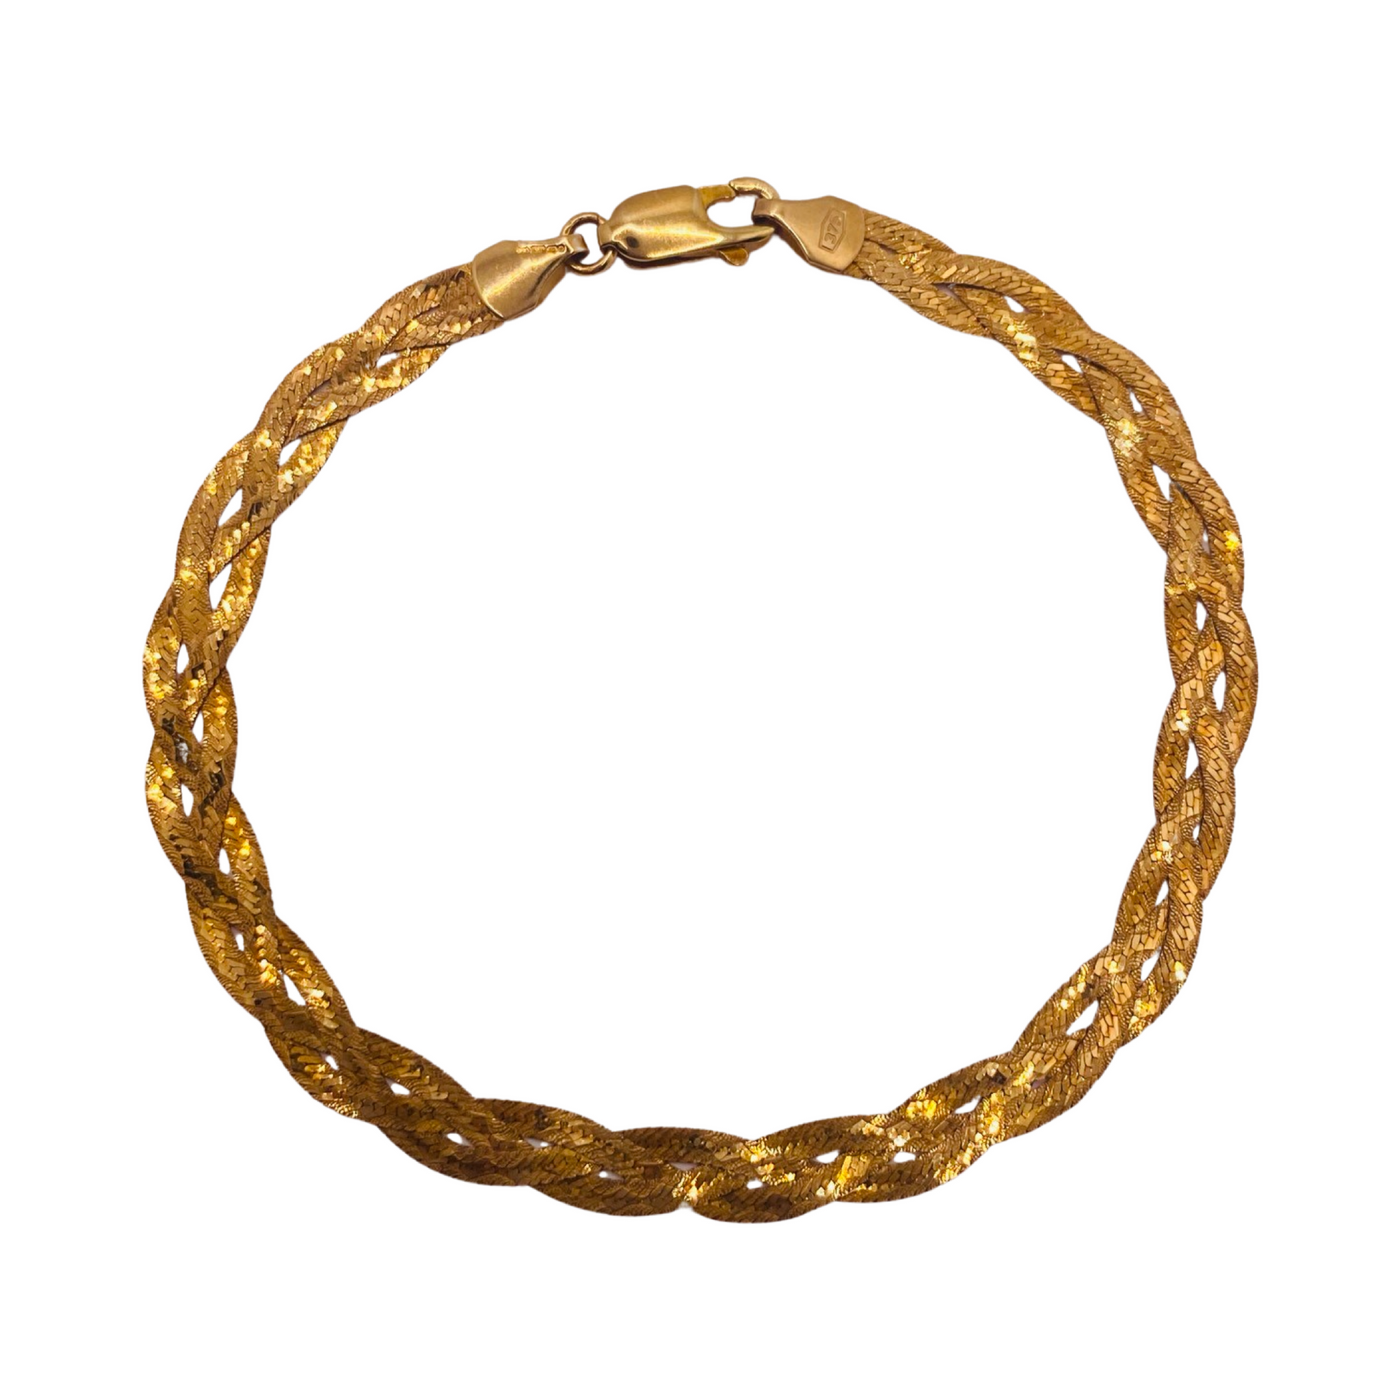 9ct Gold Double Sided Herringbone Bracelet